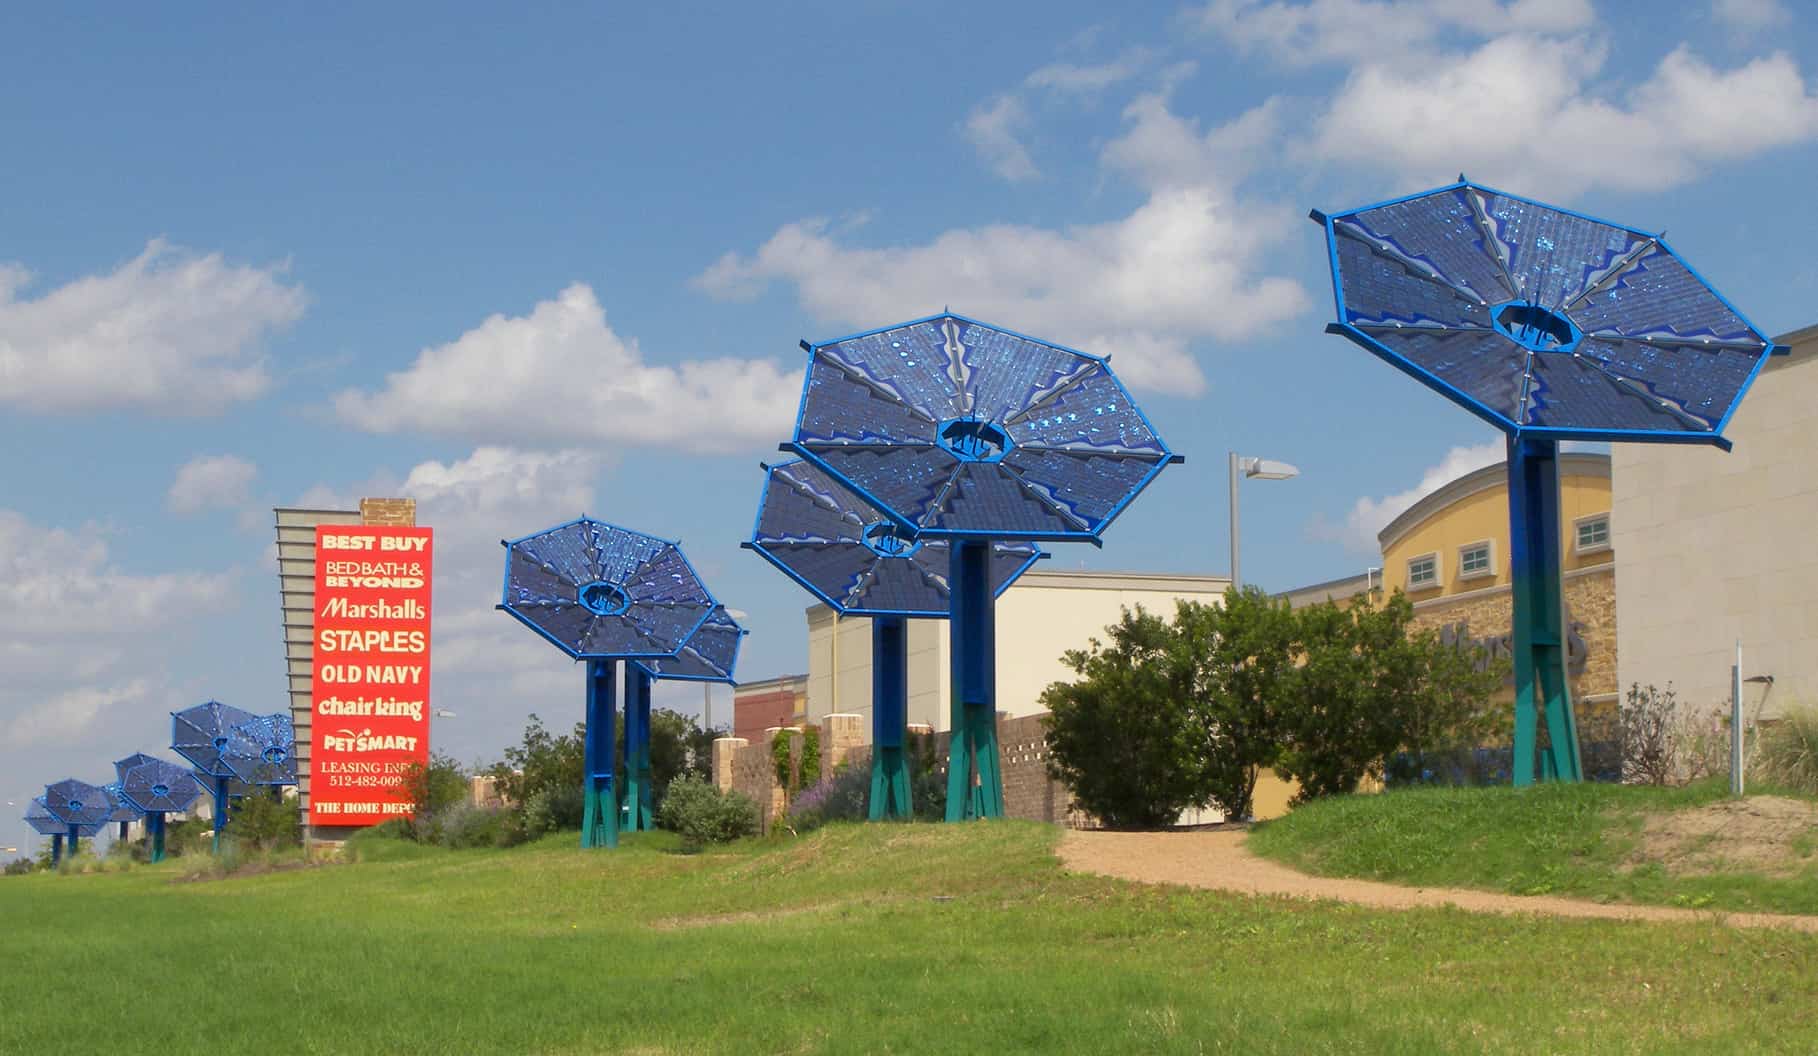 Mueller Austin Solar Array (image: Wikimedia Commons)